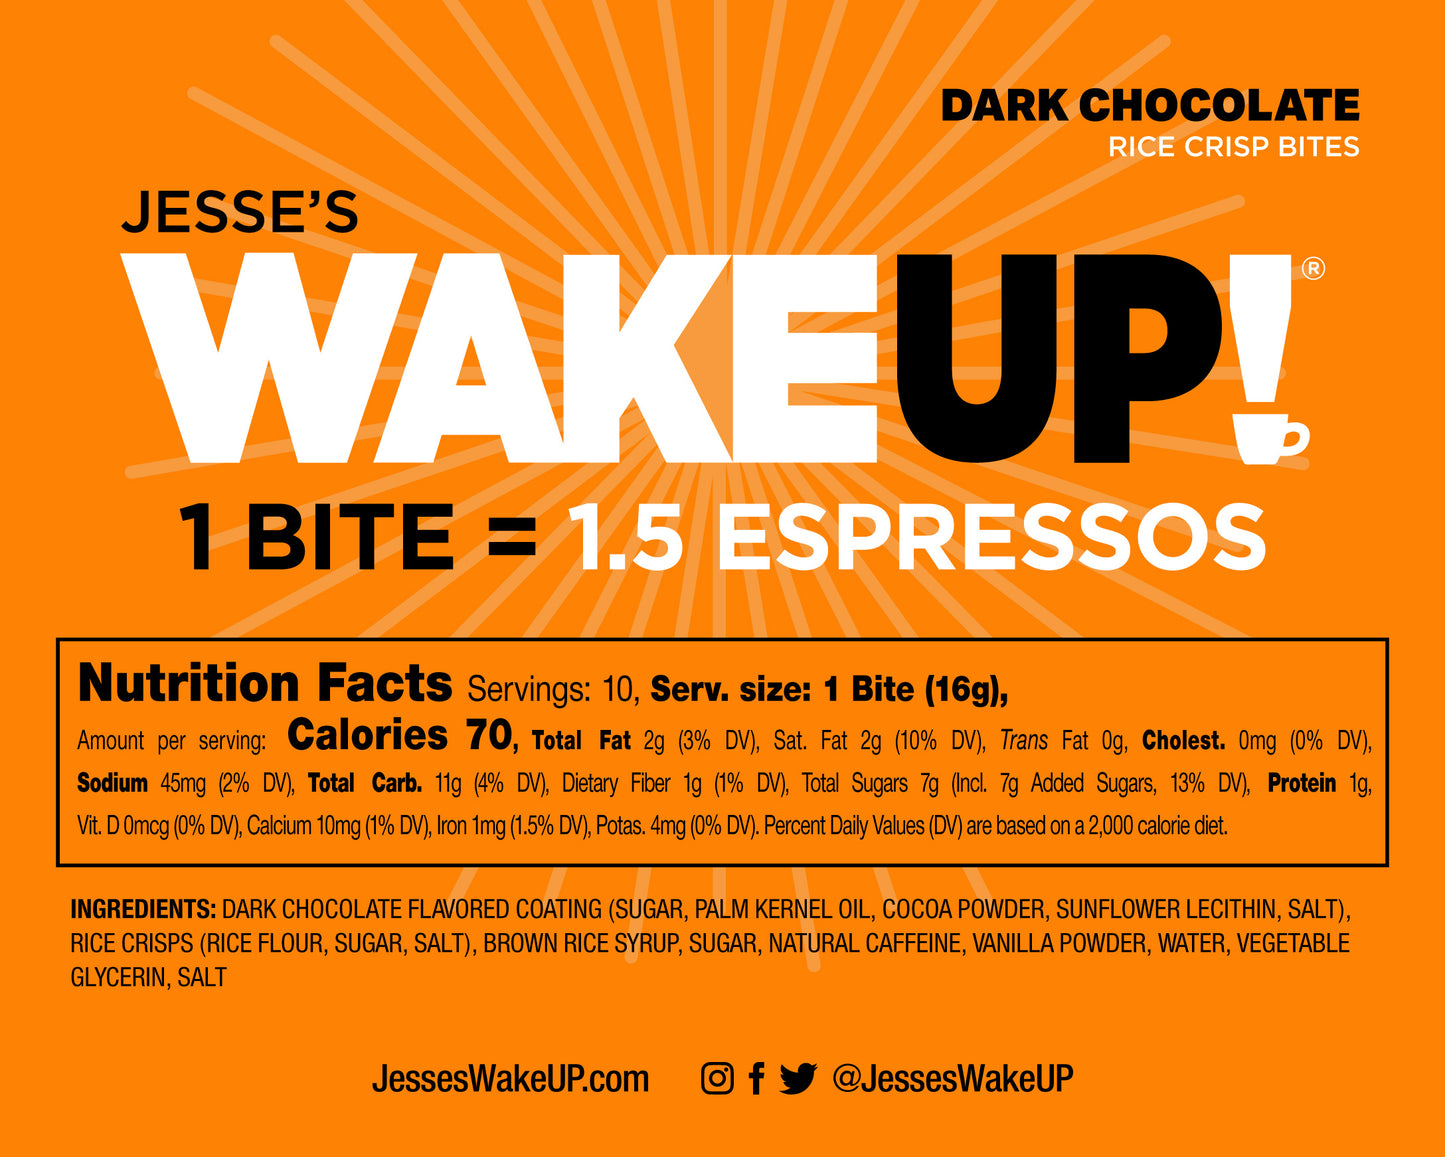 Jesse's WakeUP! 1 Bite = 1.5 Espressos (Chocolate)